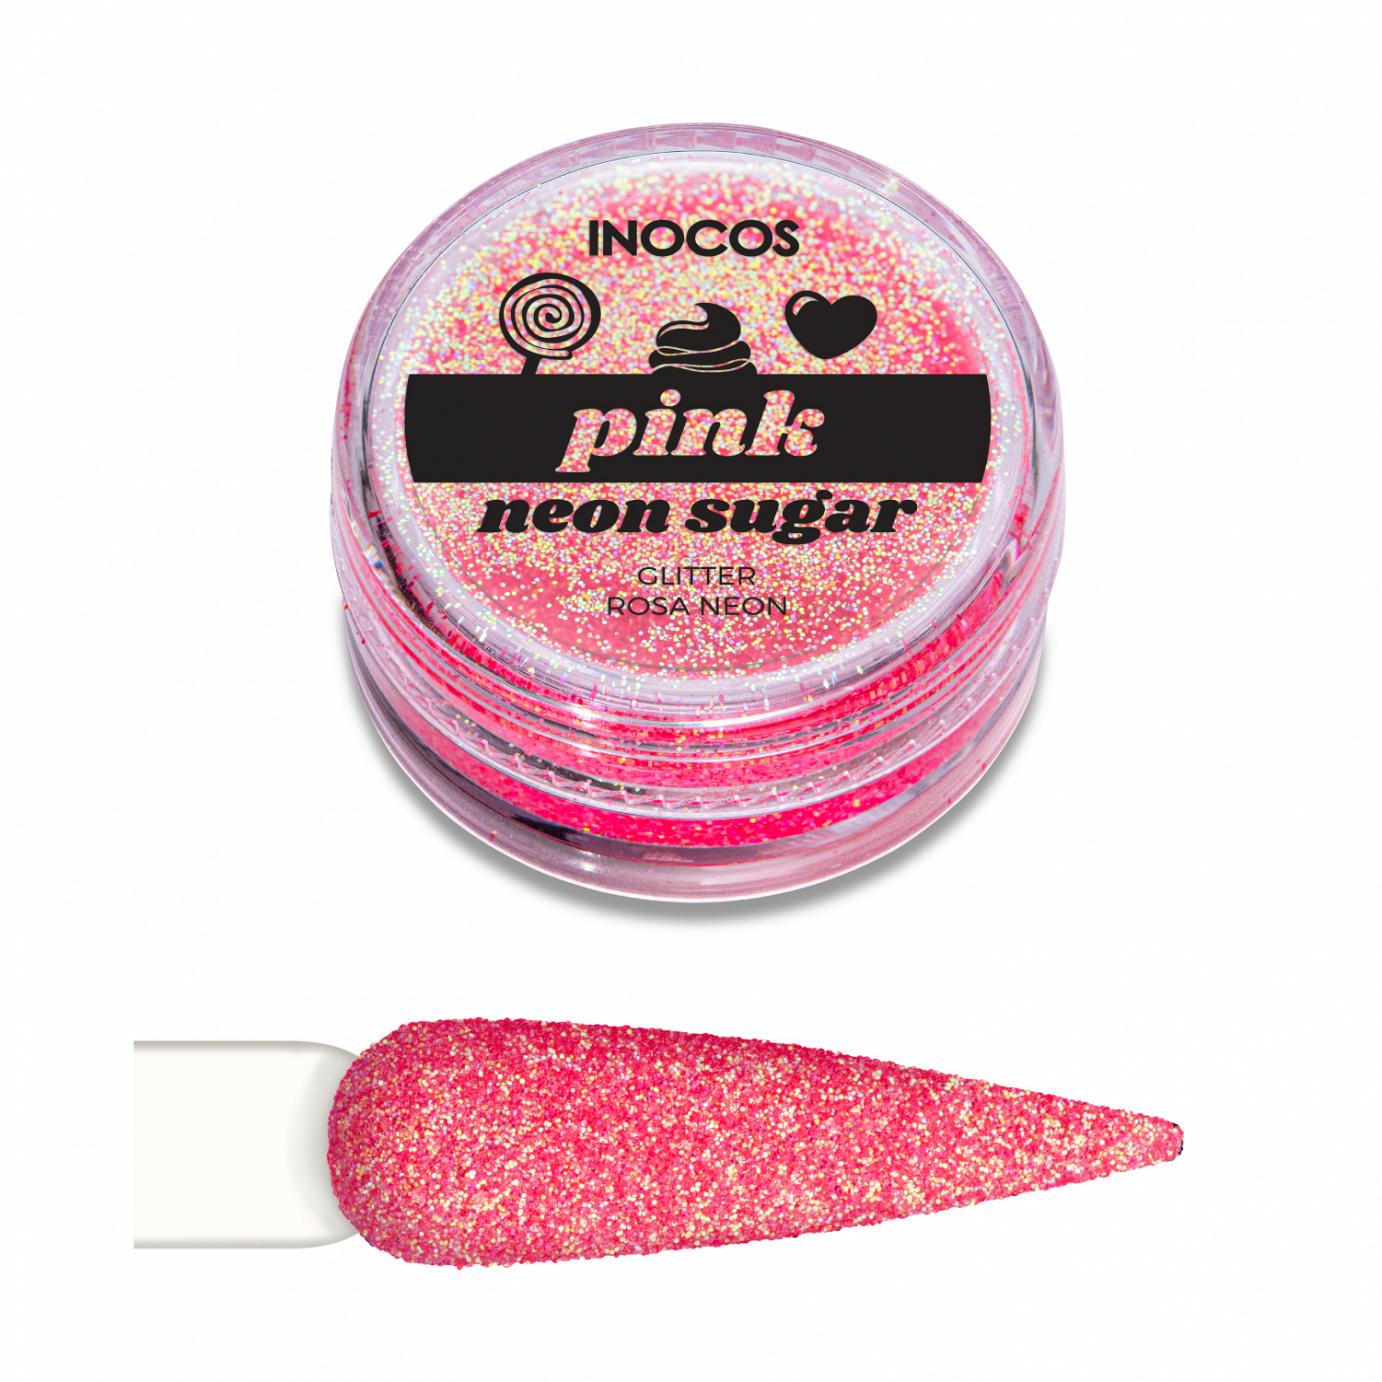 Inocos glitter para uñas polvo Neon Sugar rosa